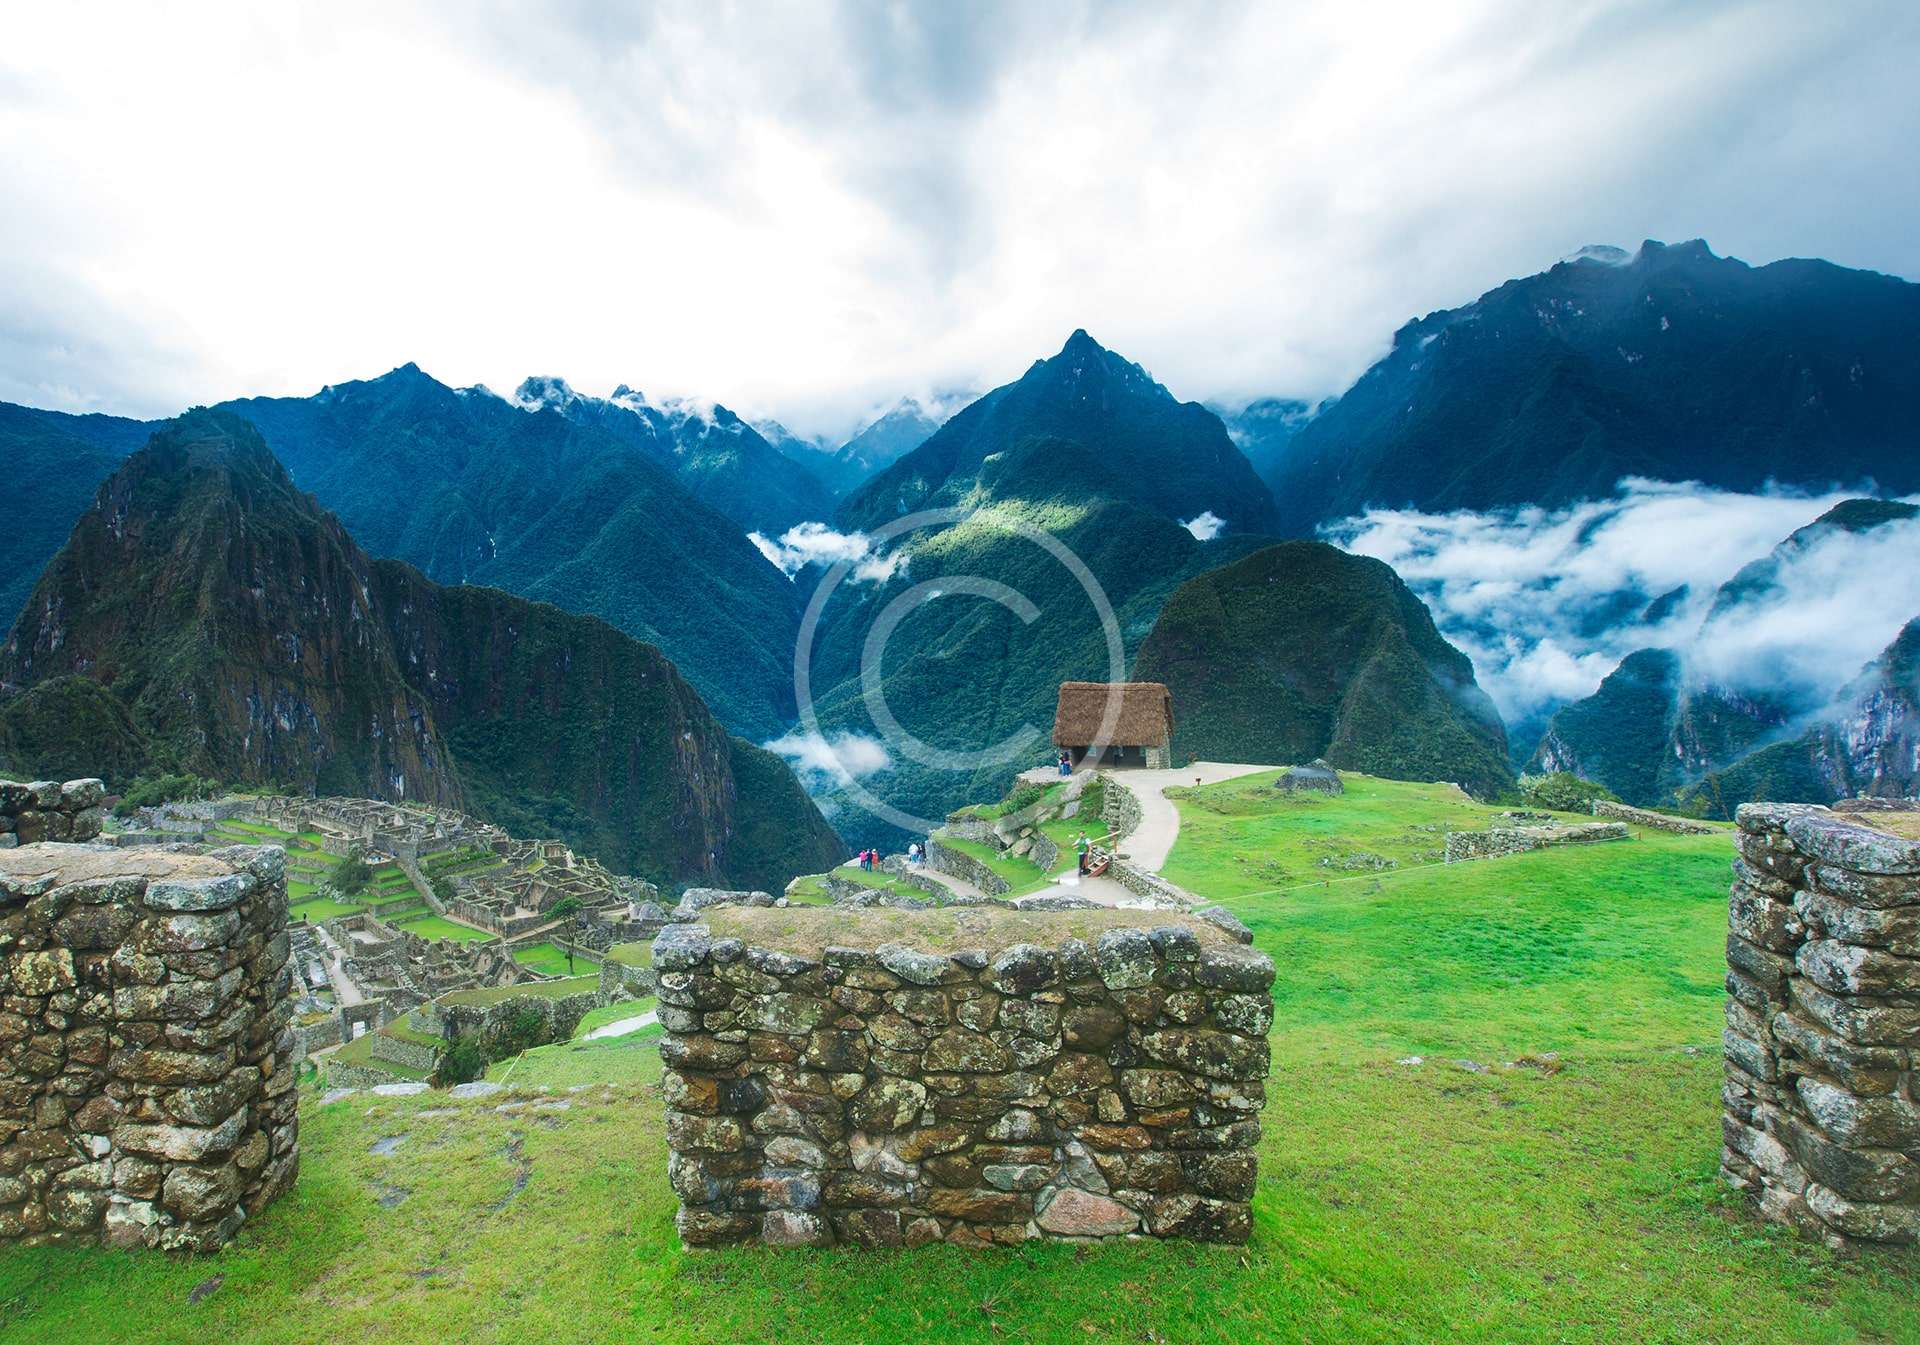 The Short Machu Picchu Hike